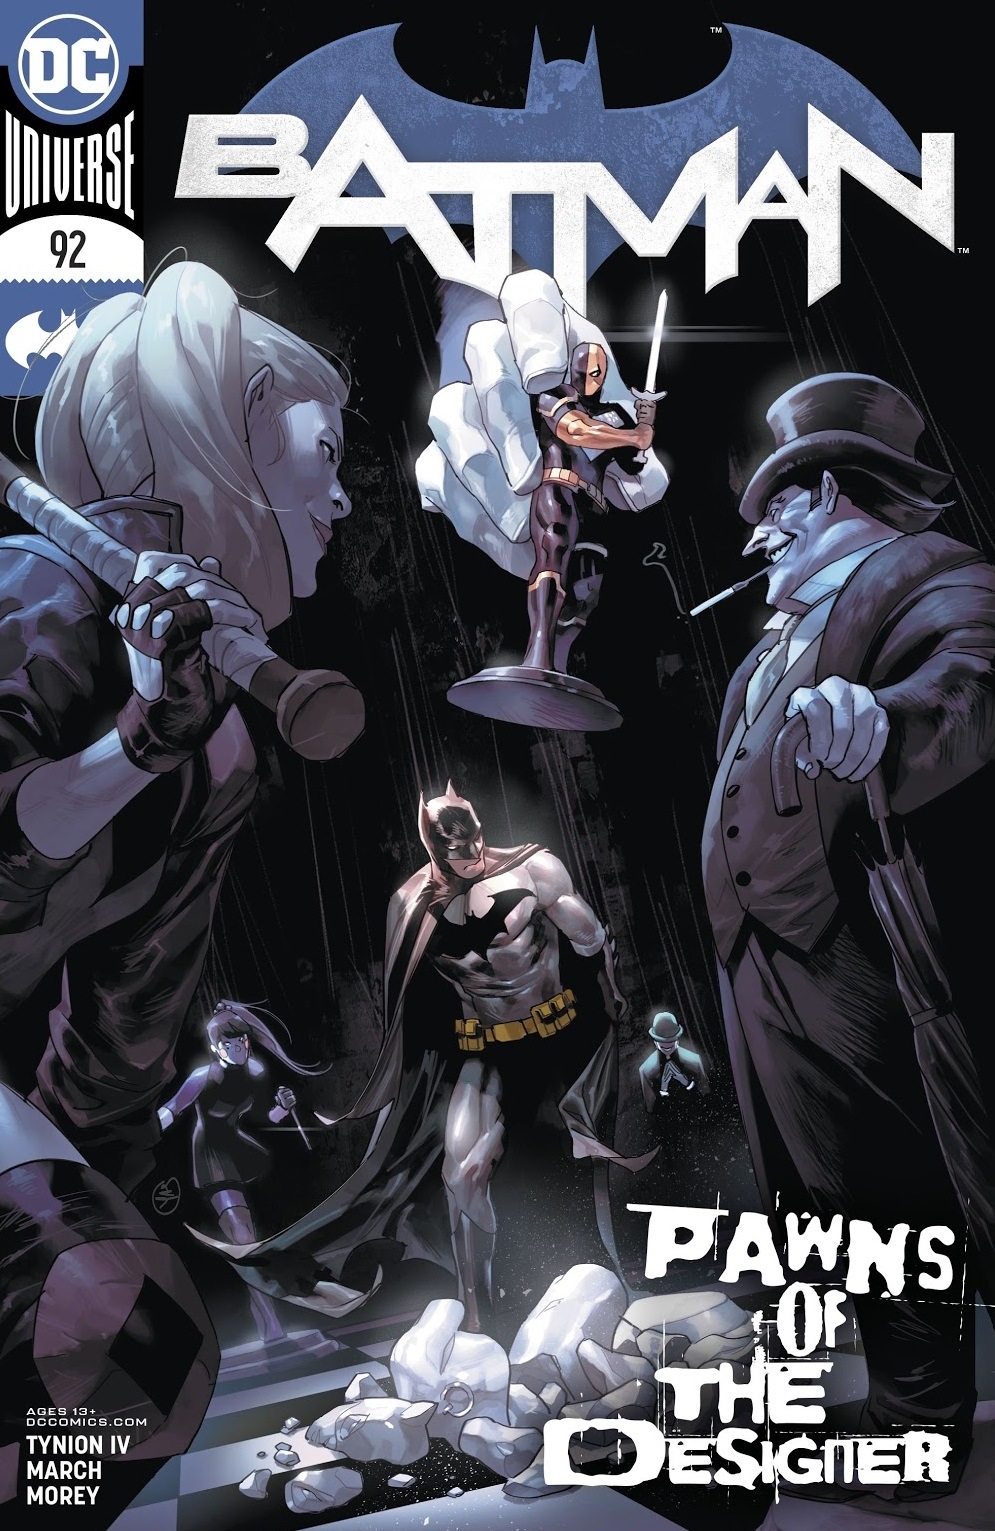 Batman issue 92 review